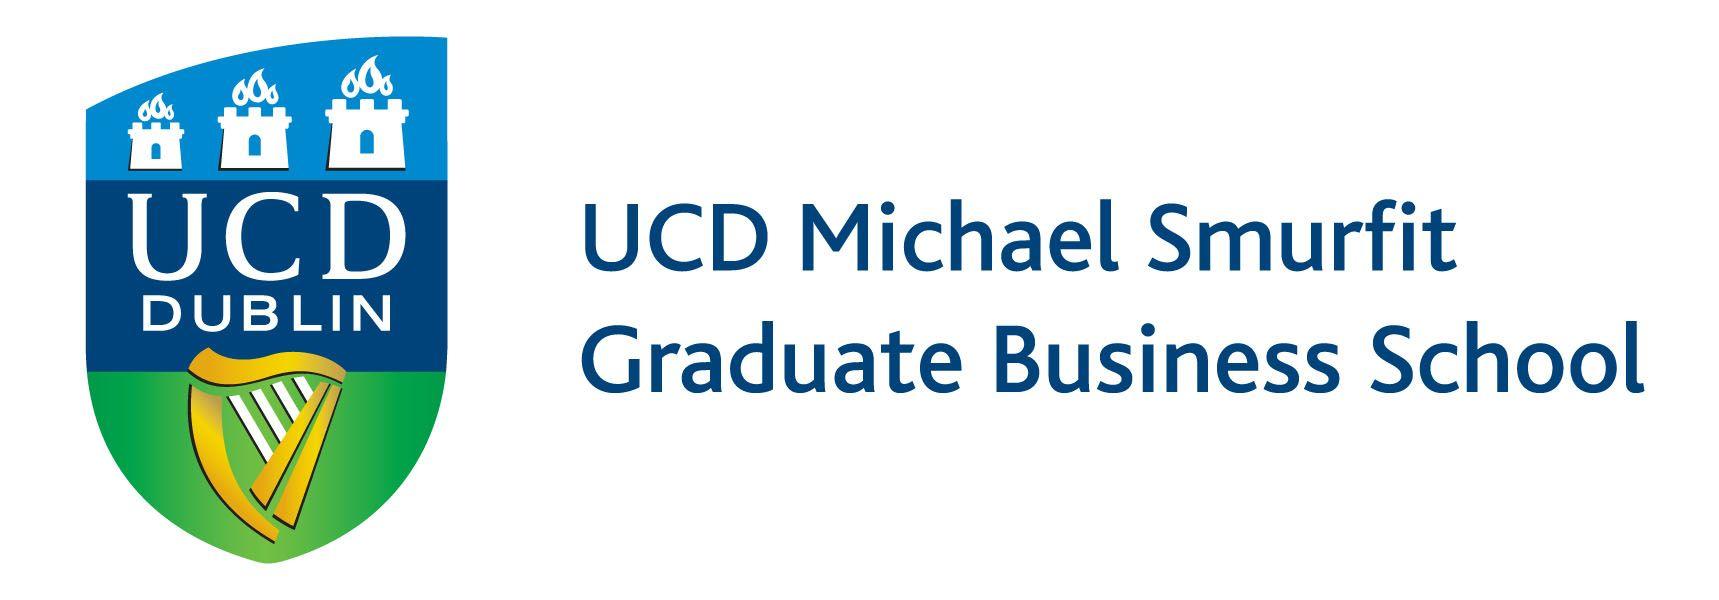 University College Dublin Logo - University College Dublin: Smurfit Business School • BusinessBecause